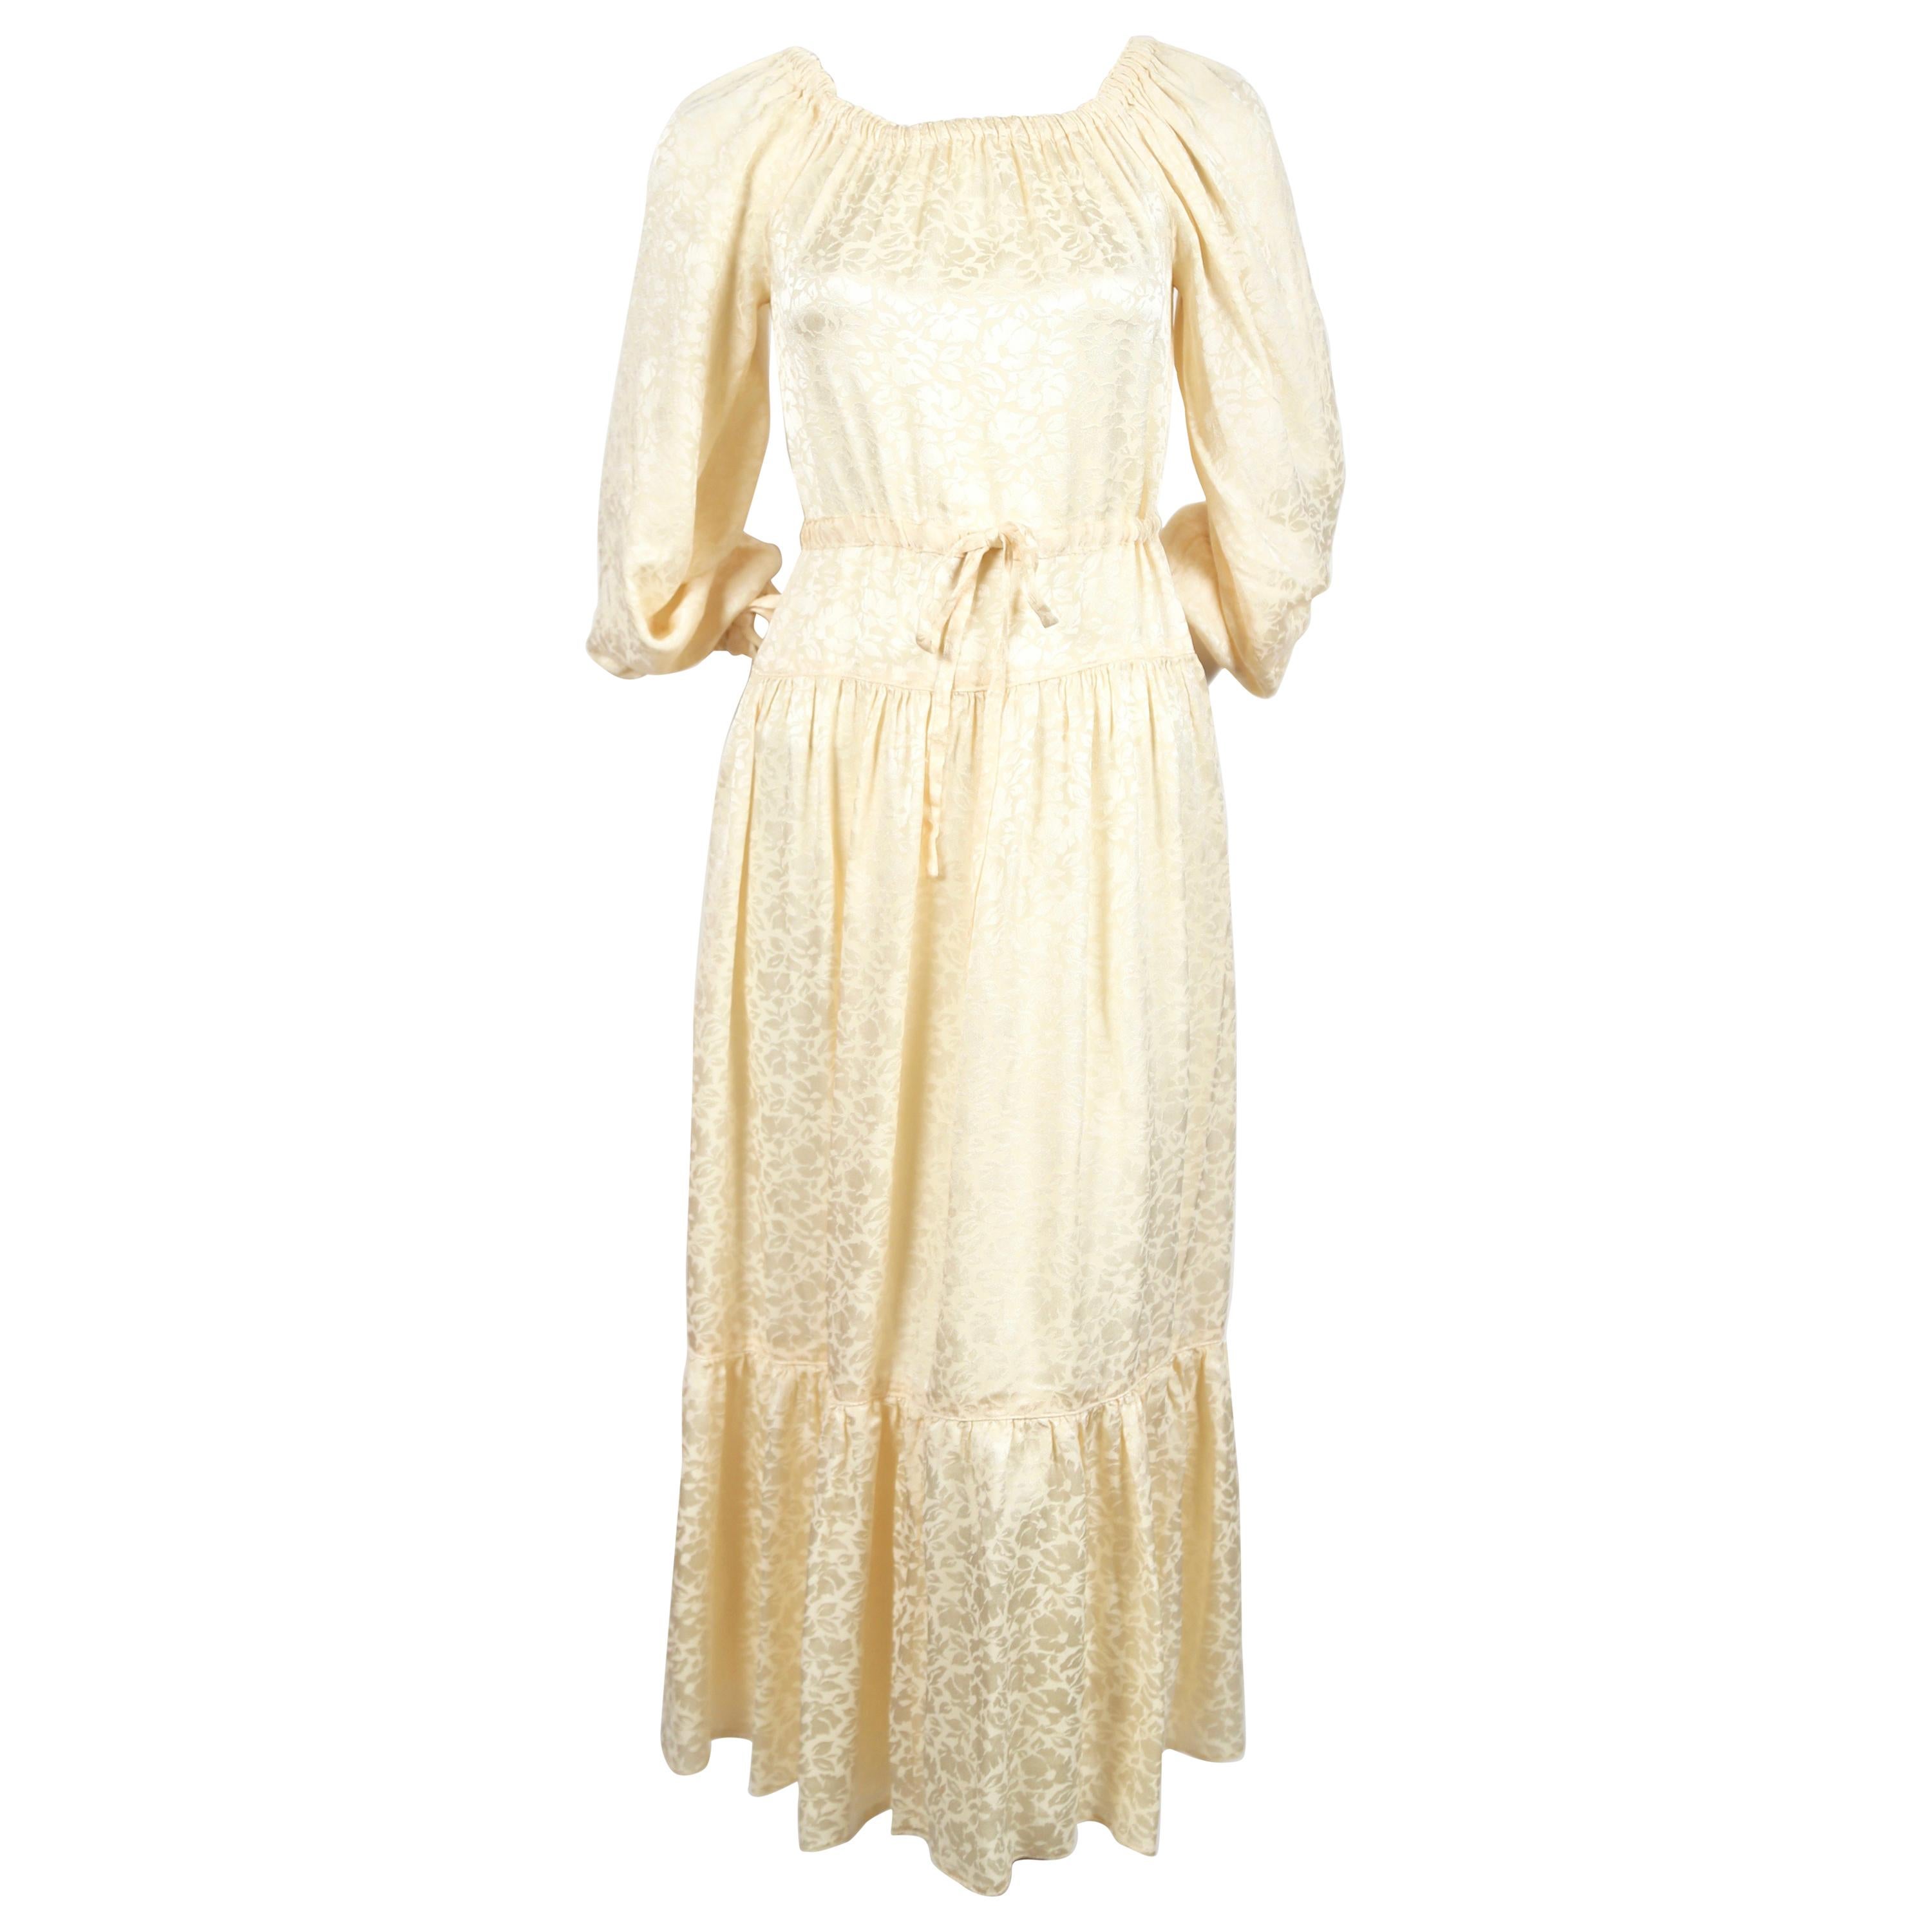 1970's OSSIE CLARK cream floral jacquard dress